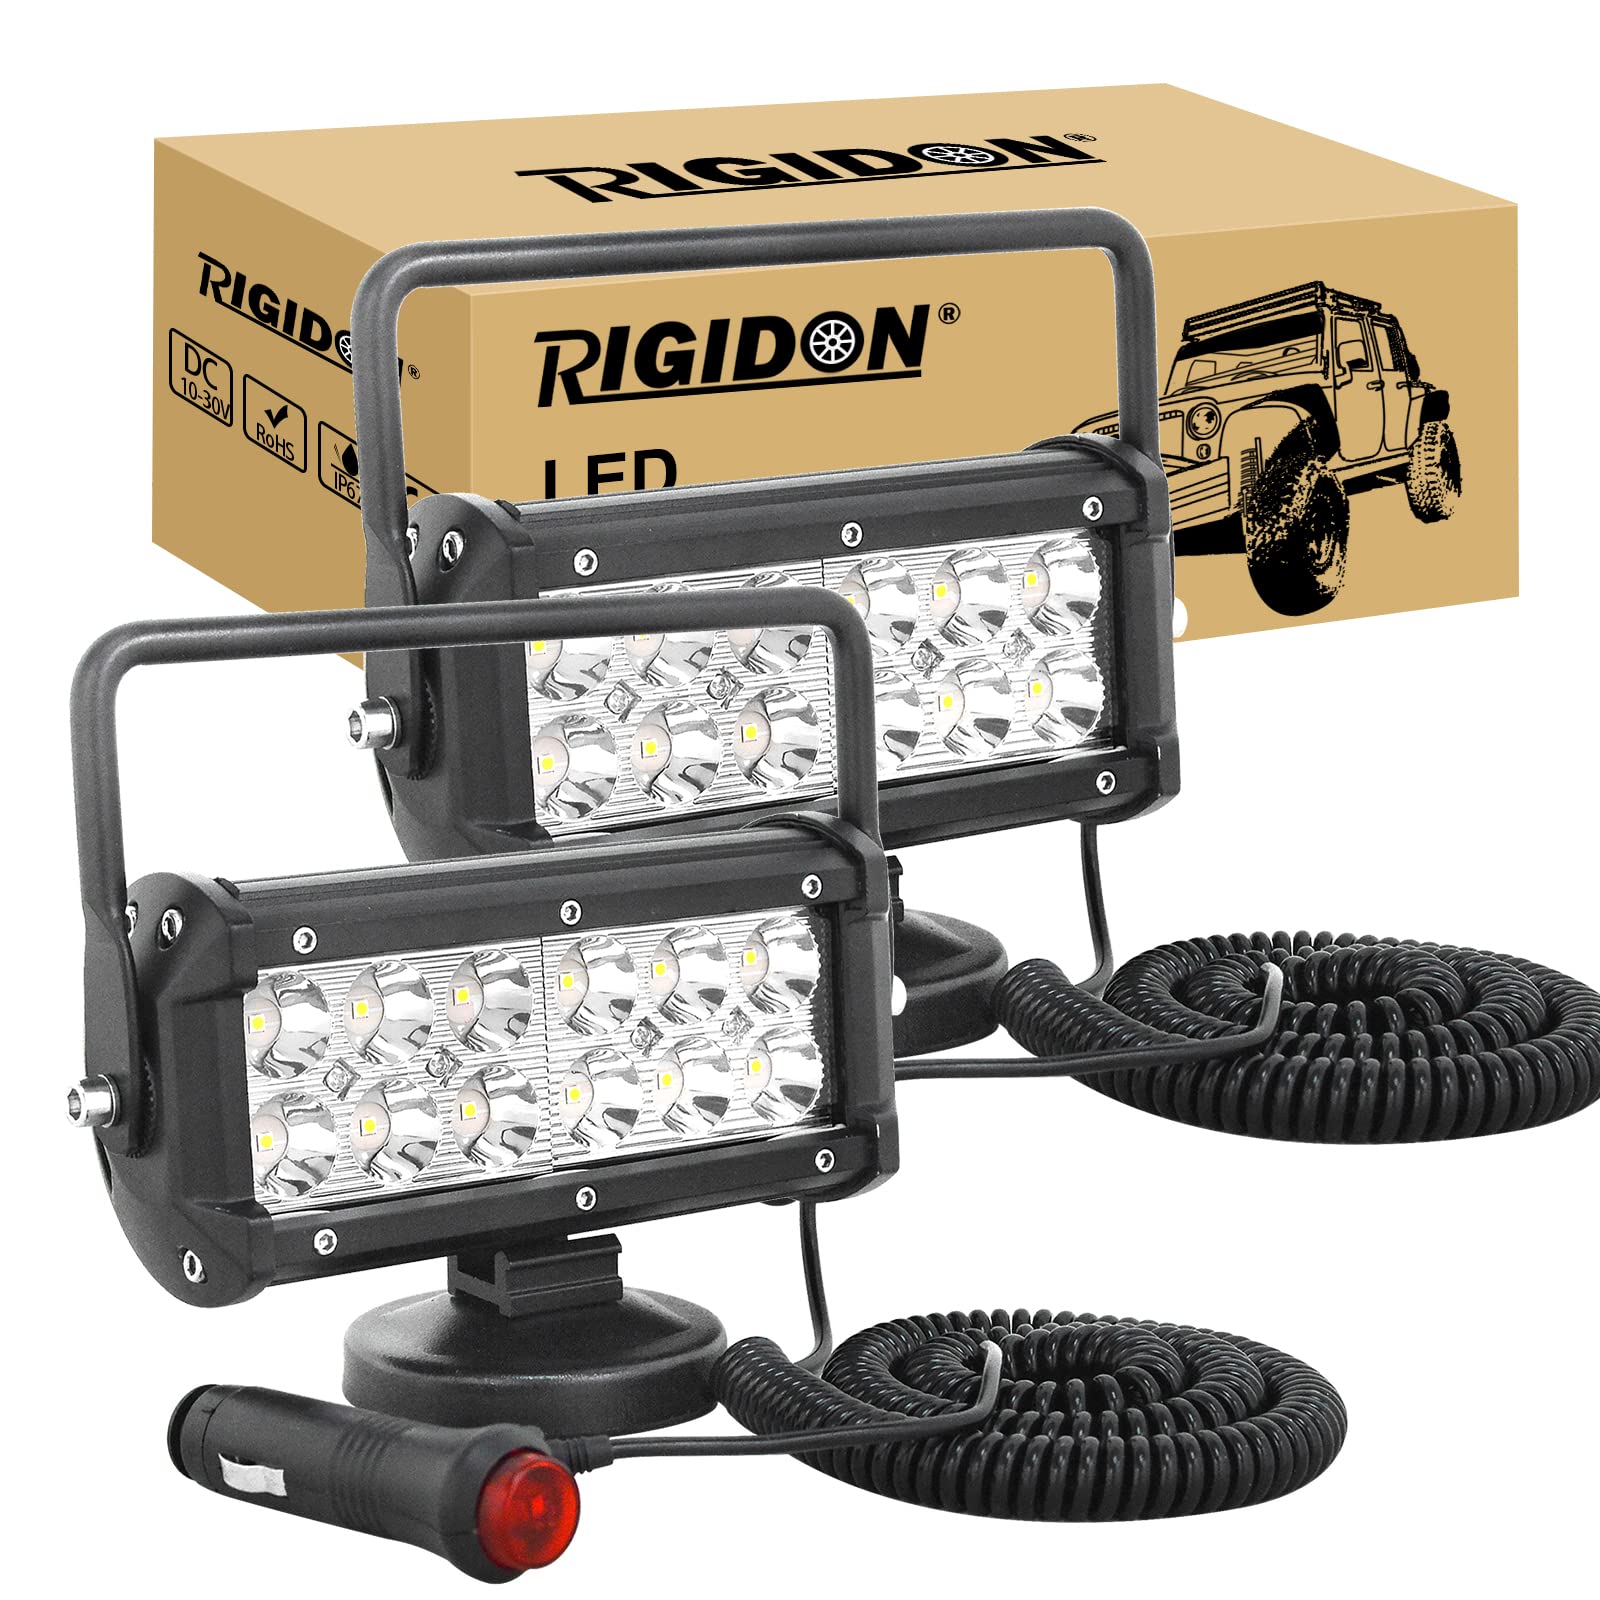 RIGIDON 2 Pcs Led arbeitsscheinwerfer mit magnetfuß, 7 Zoll 18cm 36W 12V 24V led Spot Strahler, offroad beleuchtung für Auto SUV ATV, Traktor, LKW, 4x4, Boot,6000K led suchscheinwerfer, arbeitslicht von RIGIDON